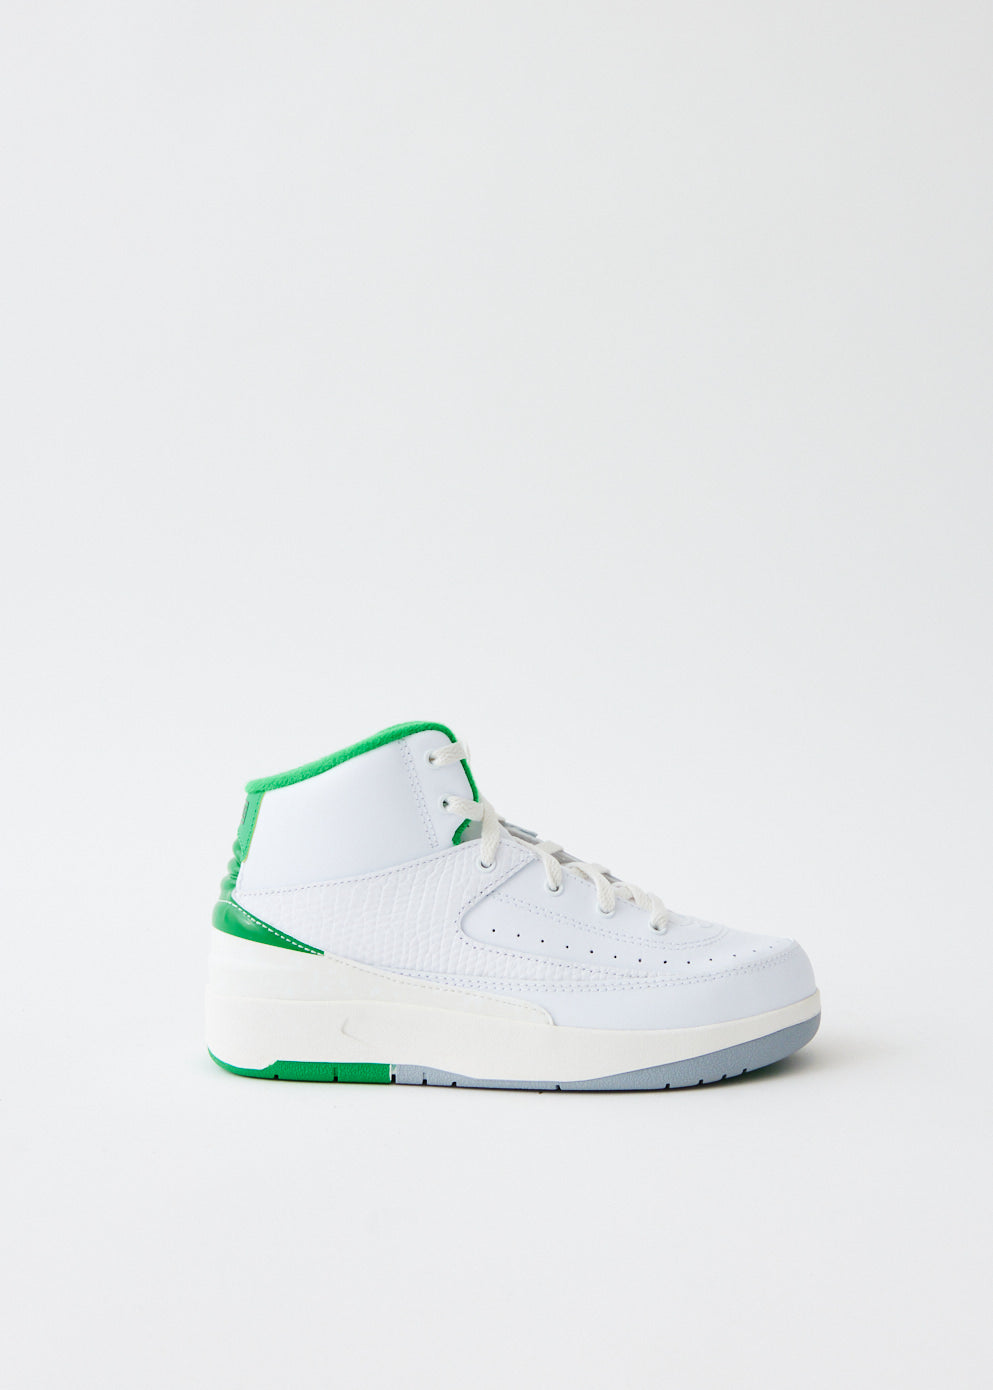 Pre-school Air Jordan 2 Retro 'Lucky Green' Sneakers